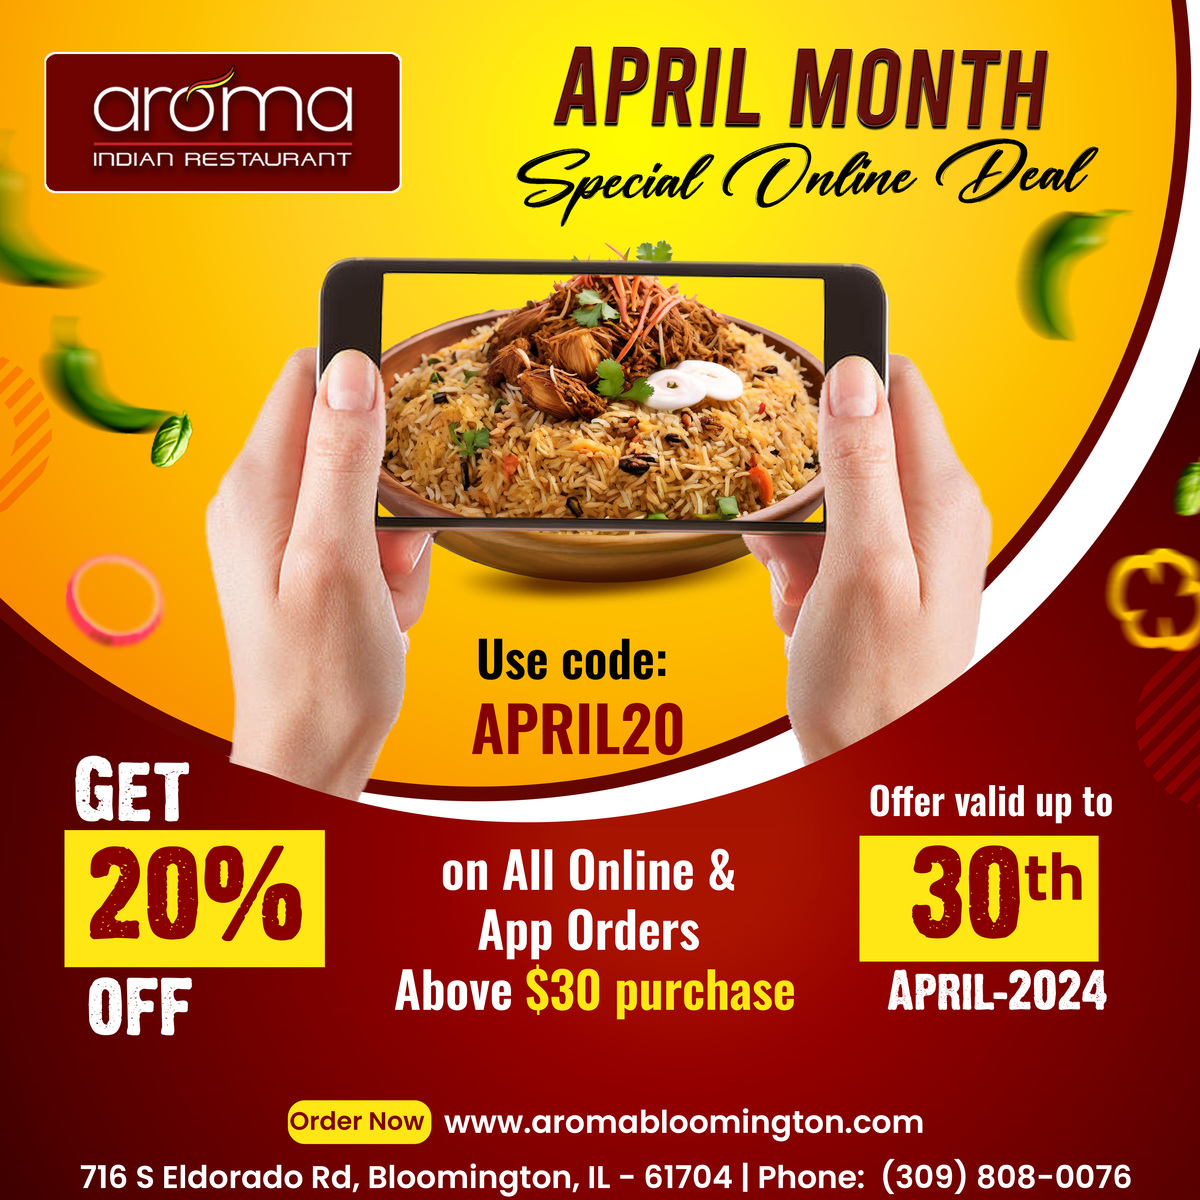 April Month Special Online Deal